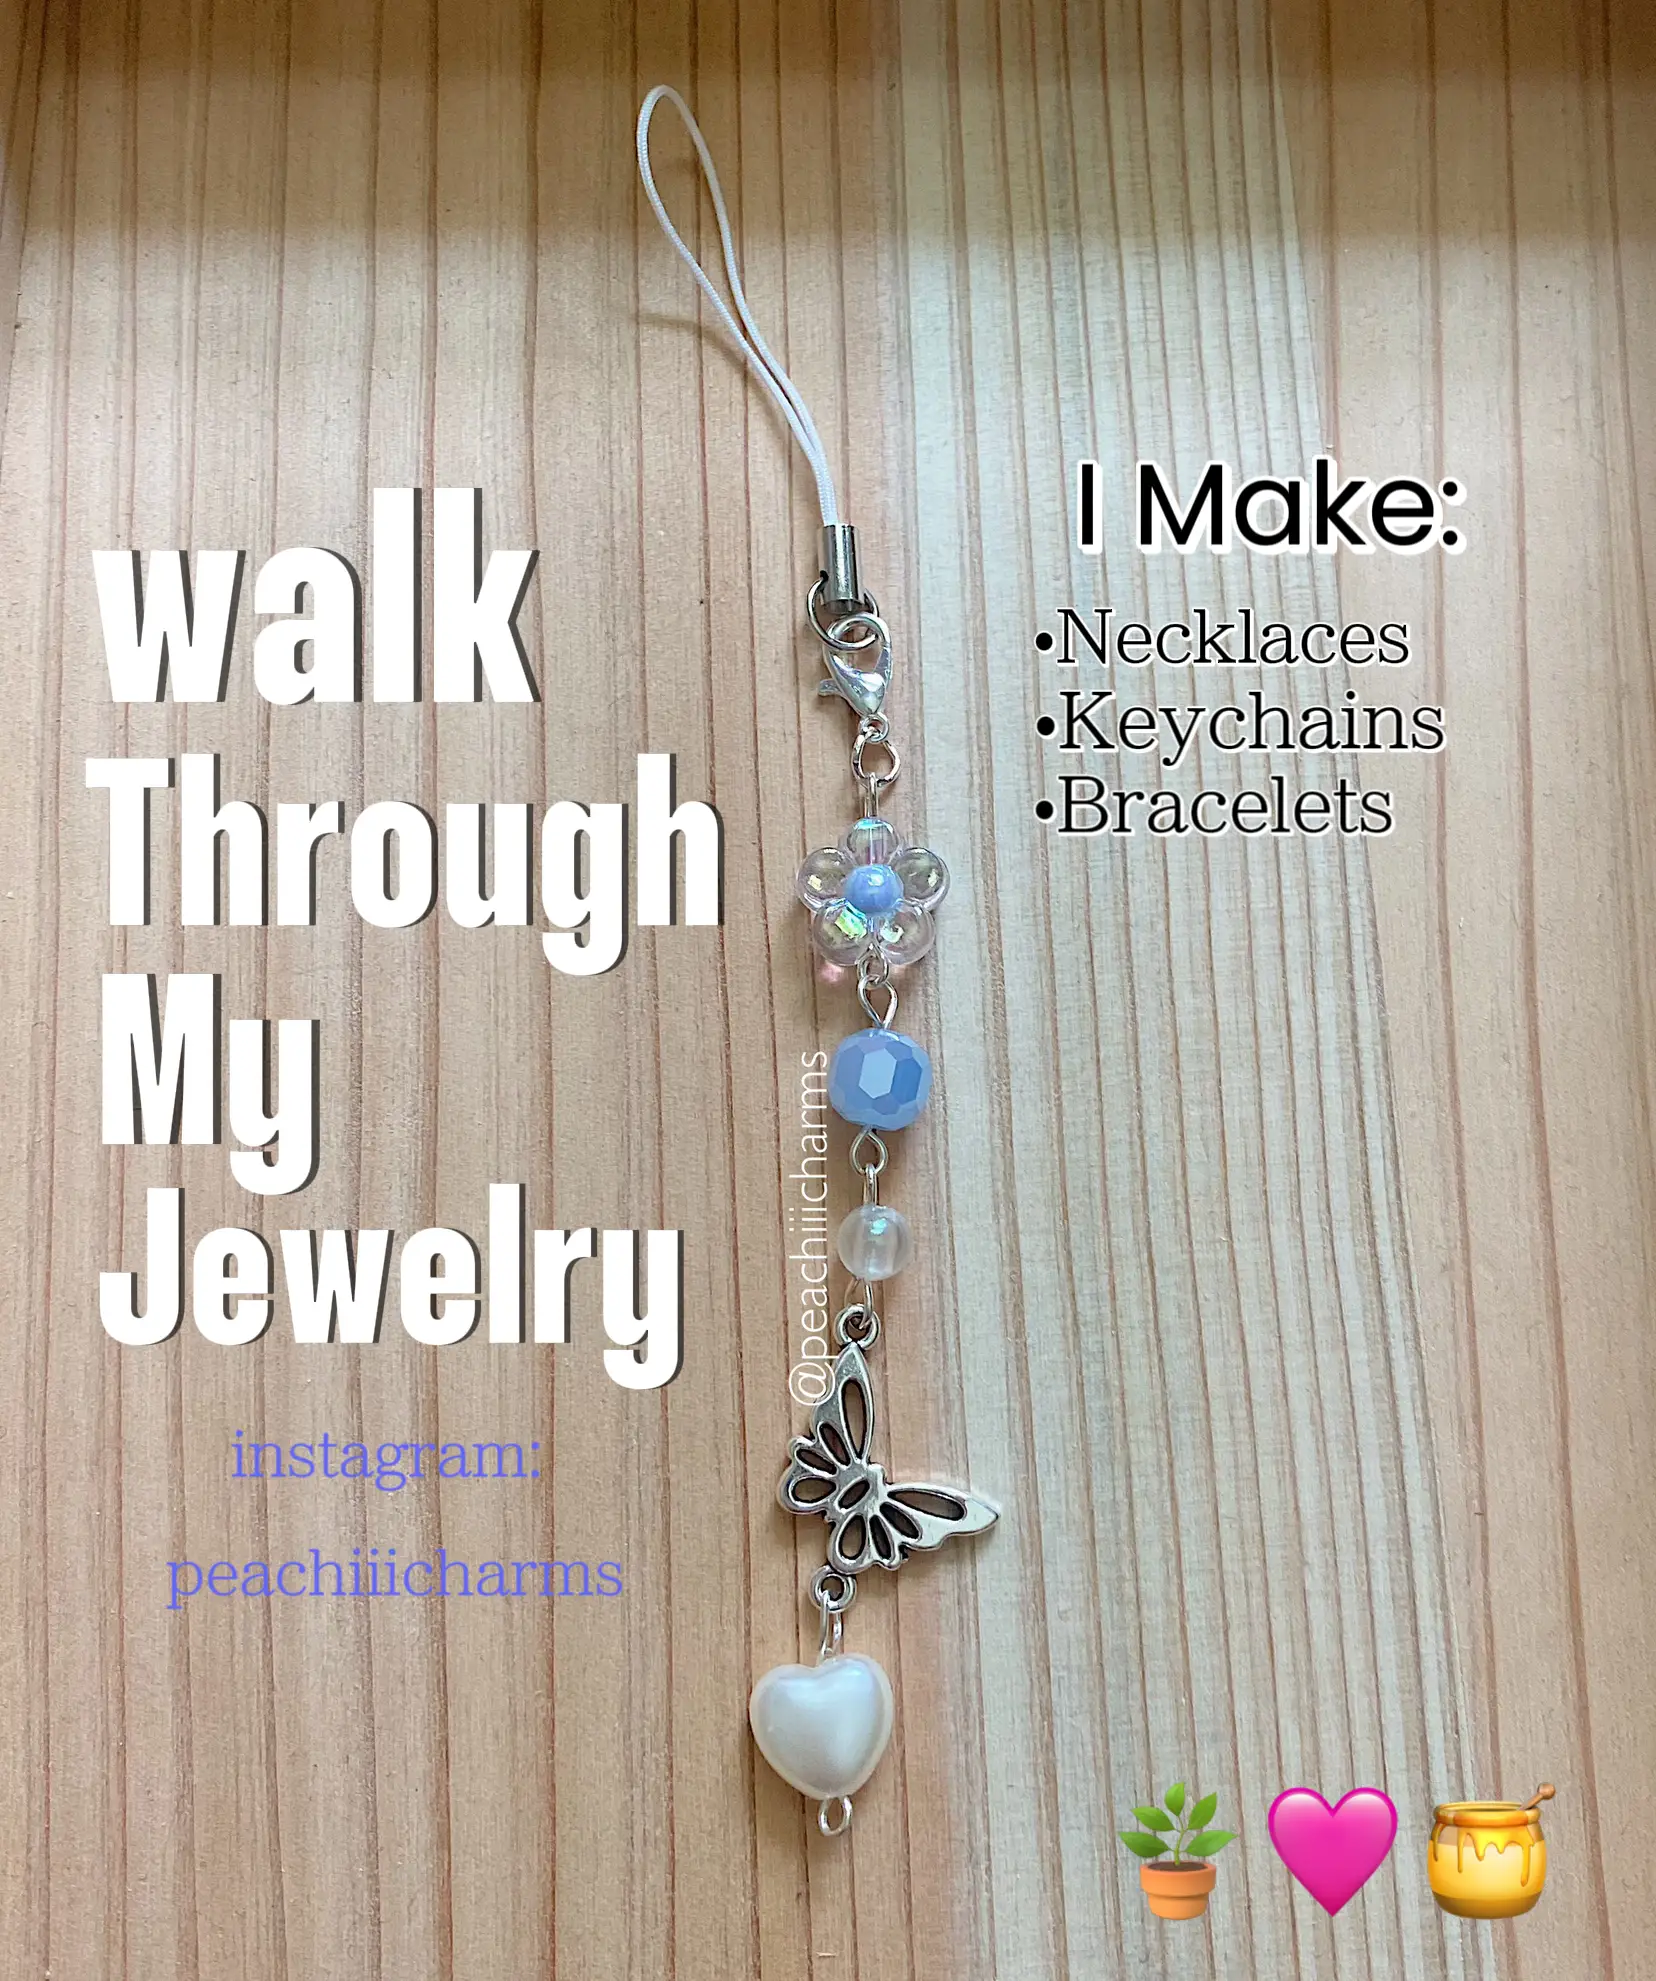 Mixed Color Polymer Clay Beads Bulk Fashion Diy Bracelet - Temu Malaysia